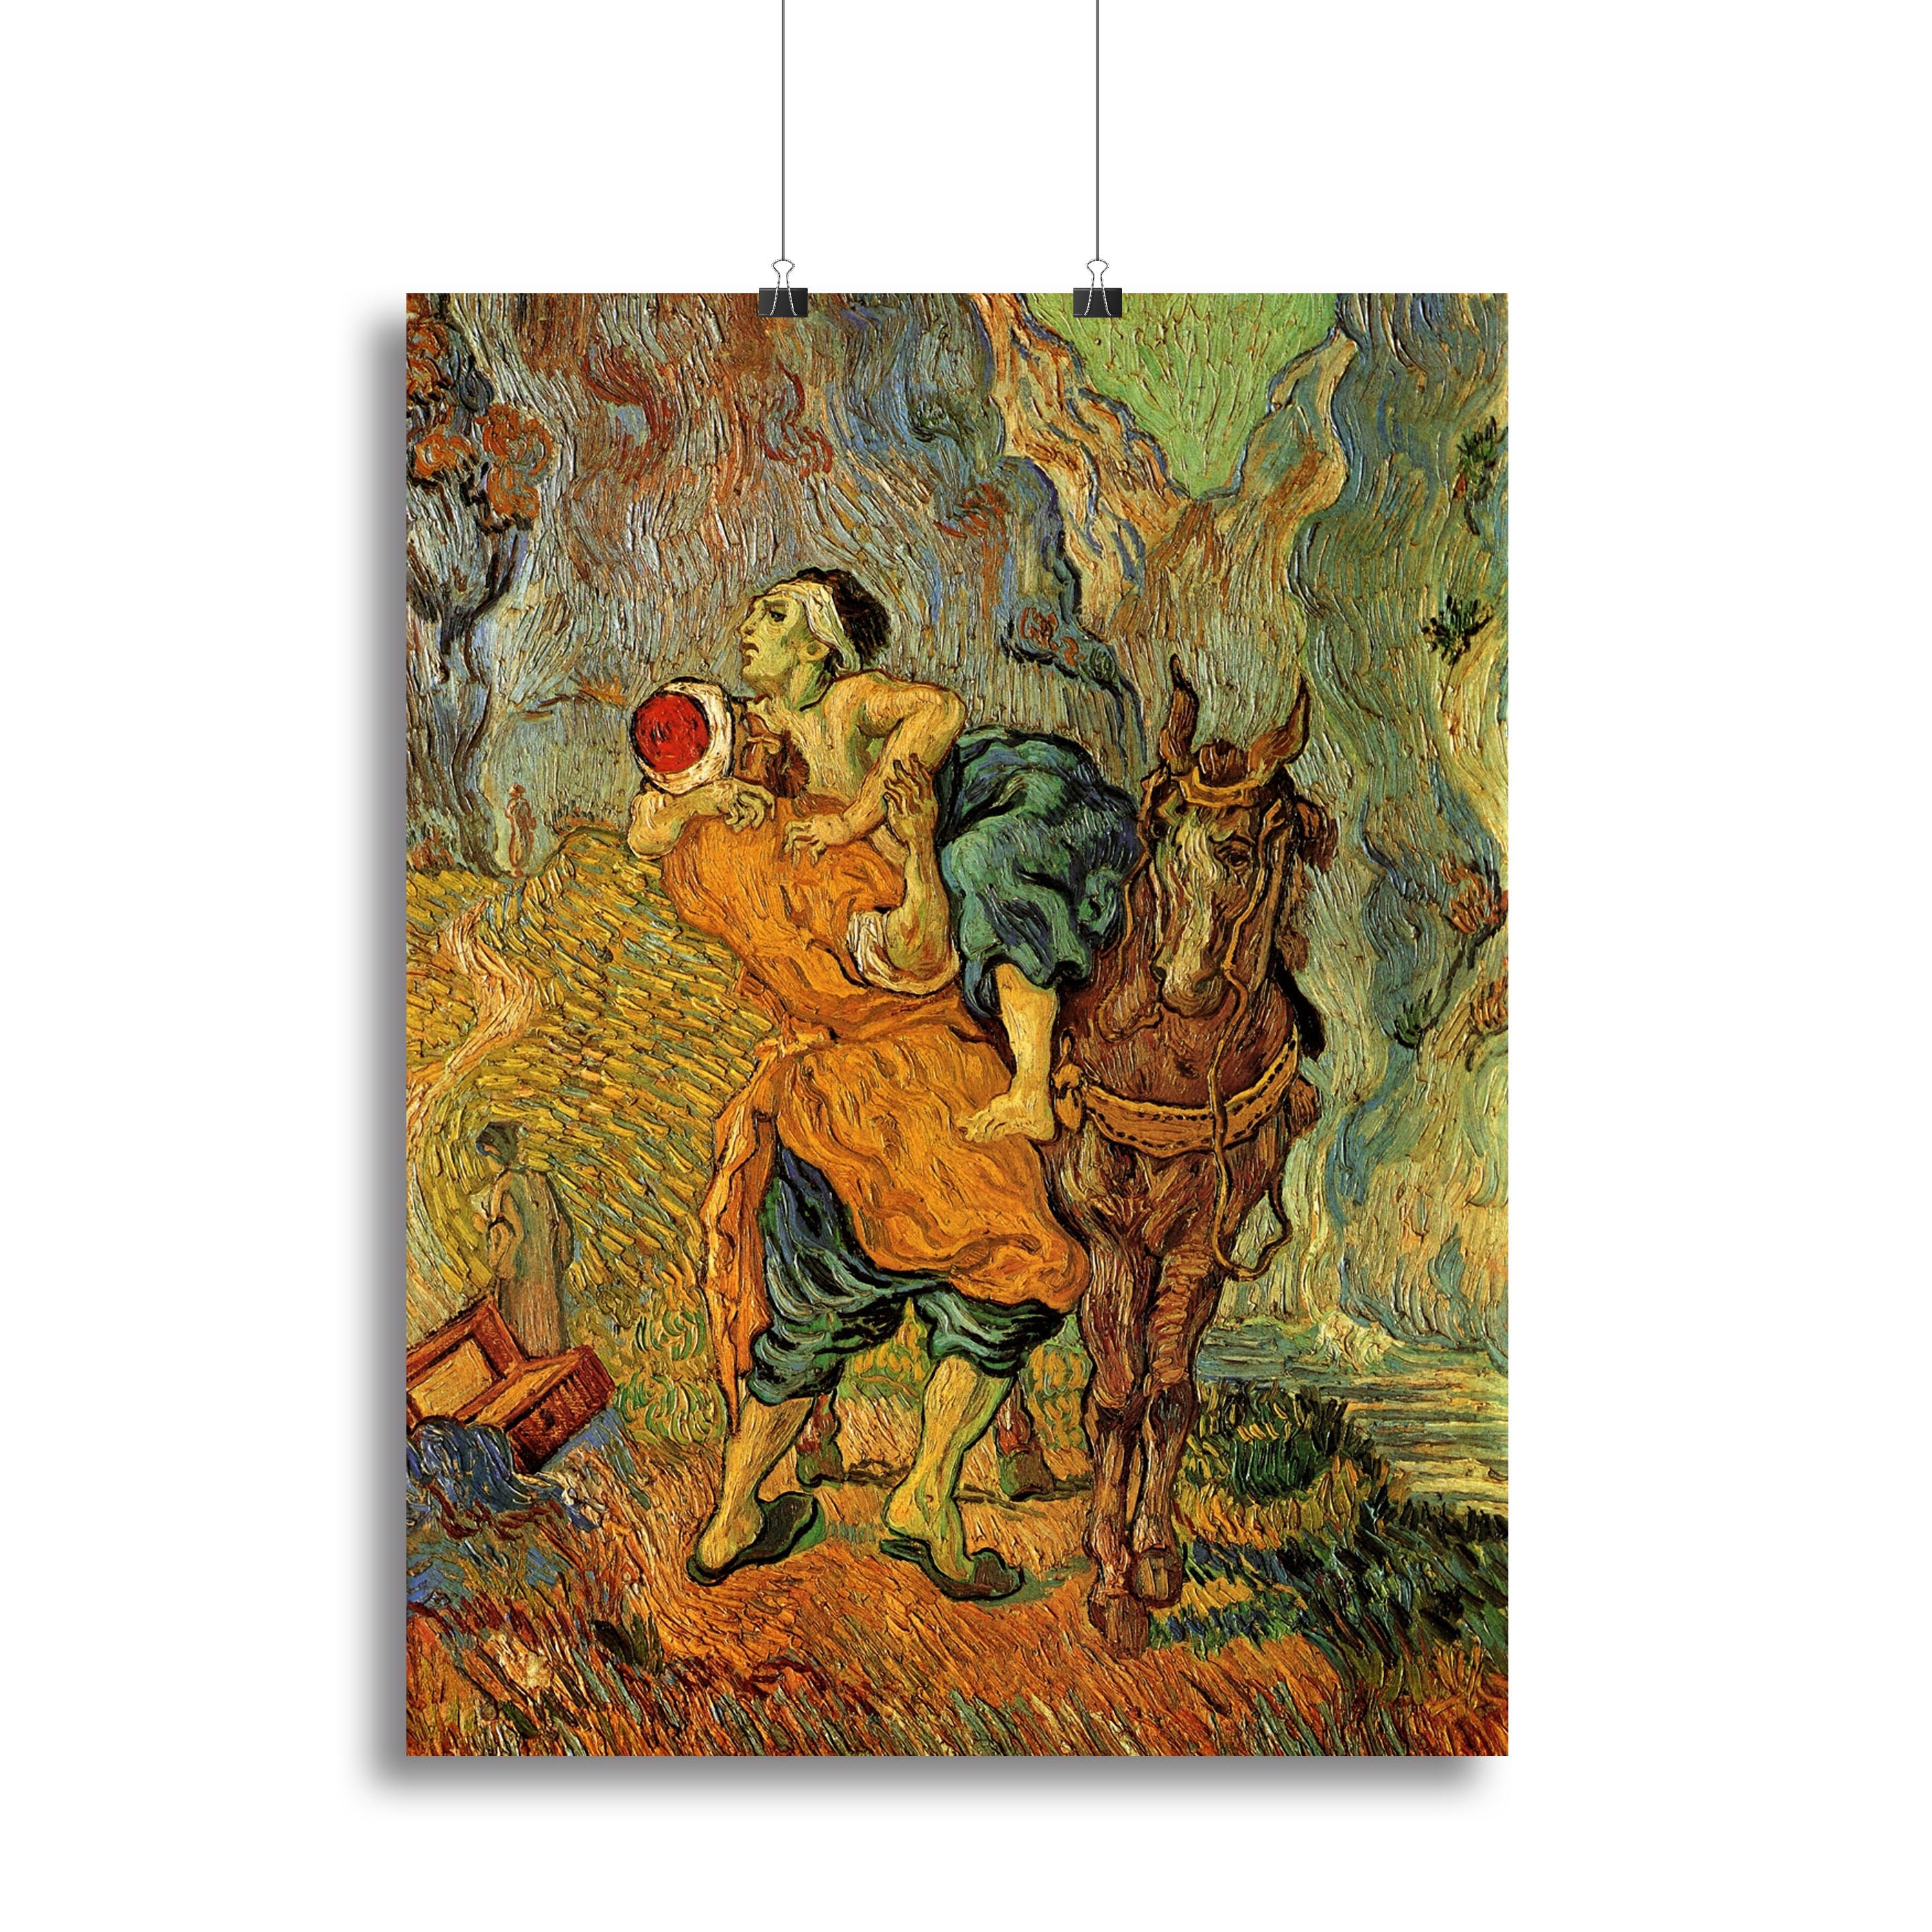 The Good Samaritan after Delacroix by Van Gogh Canvas Print or Poster - Canvas Art Rocks - 2